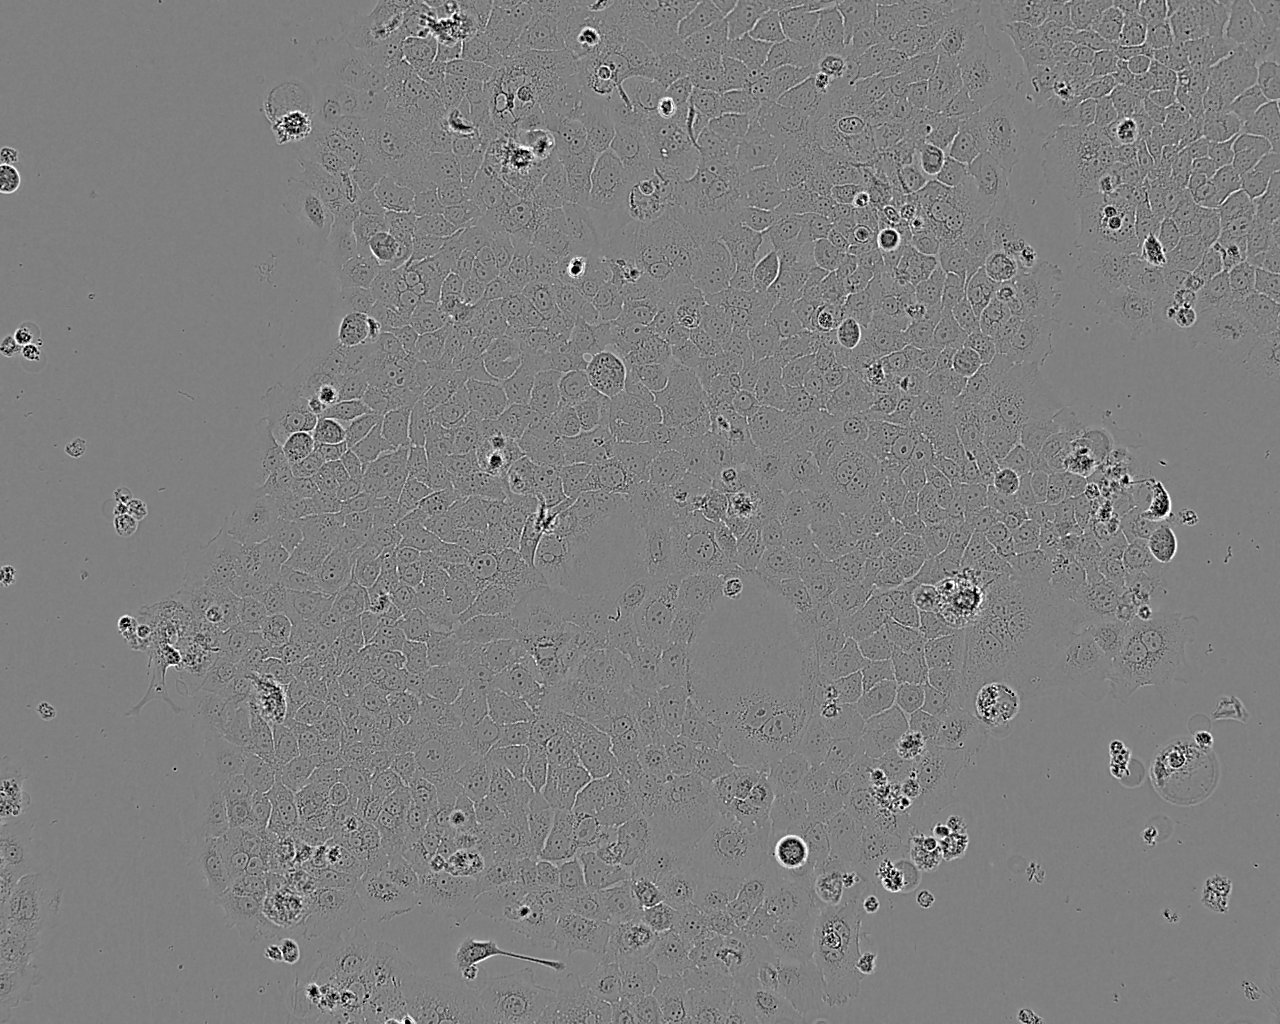 NCI-H510 epithelioid cells人小细胞肺癌细胞系,NCI-H510 epithelioid cells